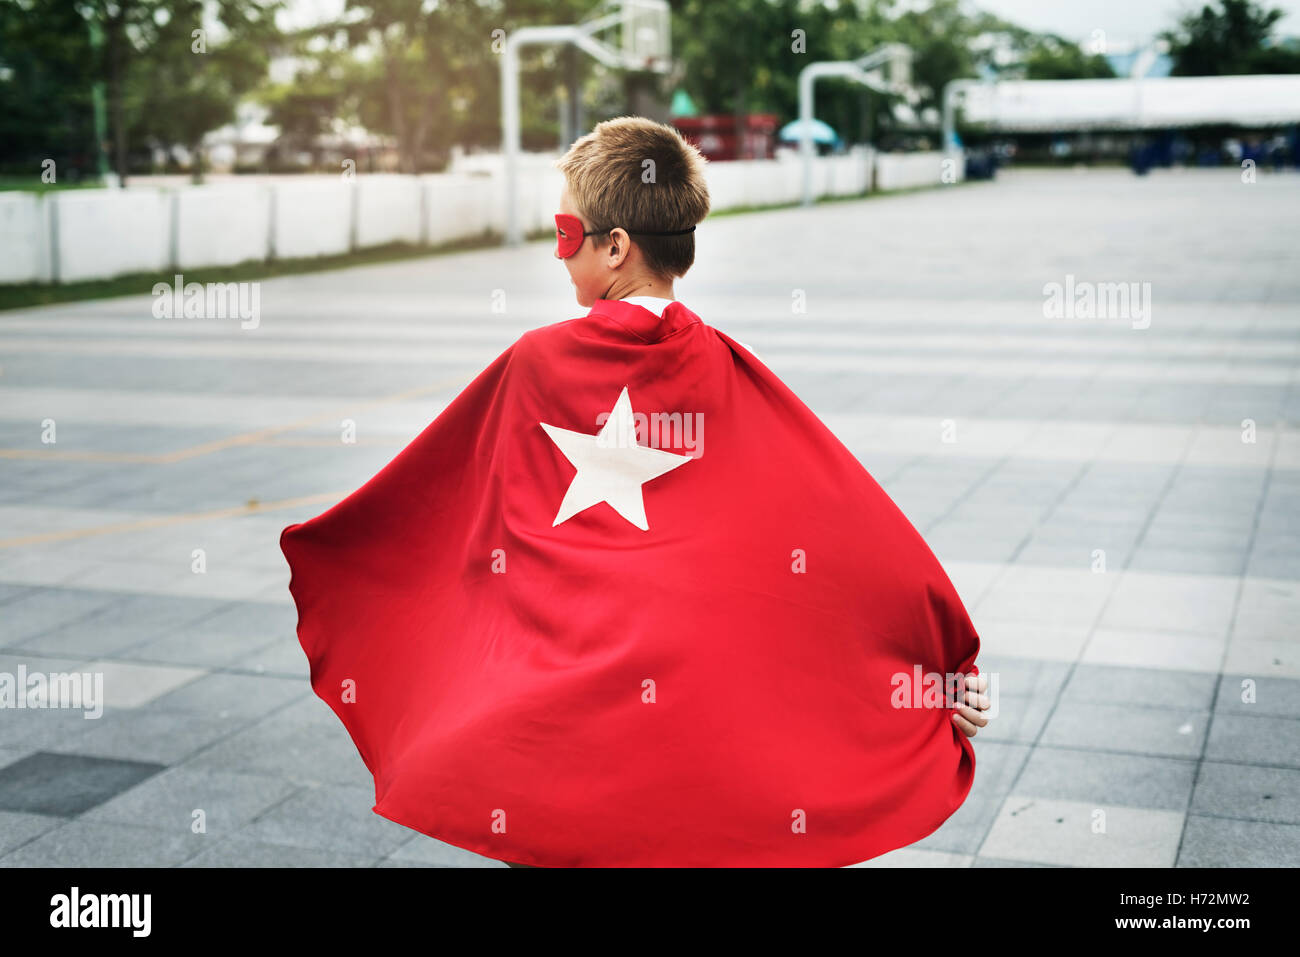 Superhero Boy Imagination Freedom Happiness Concept Stock Photo